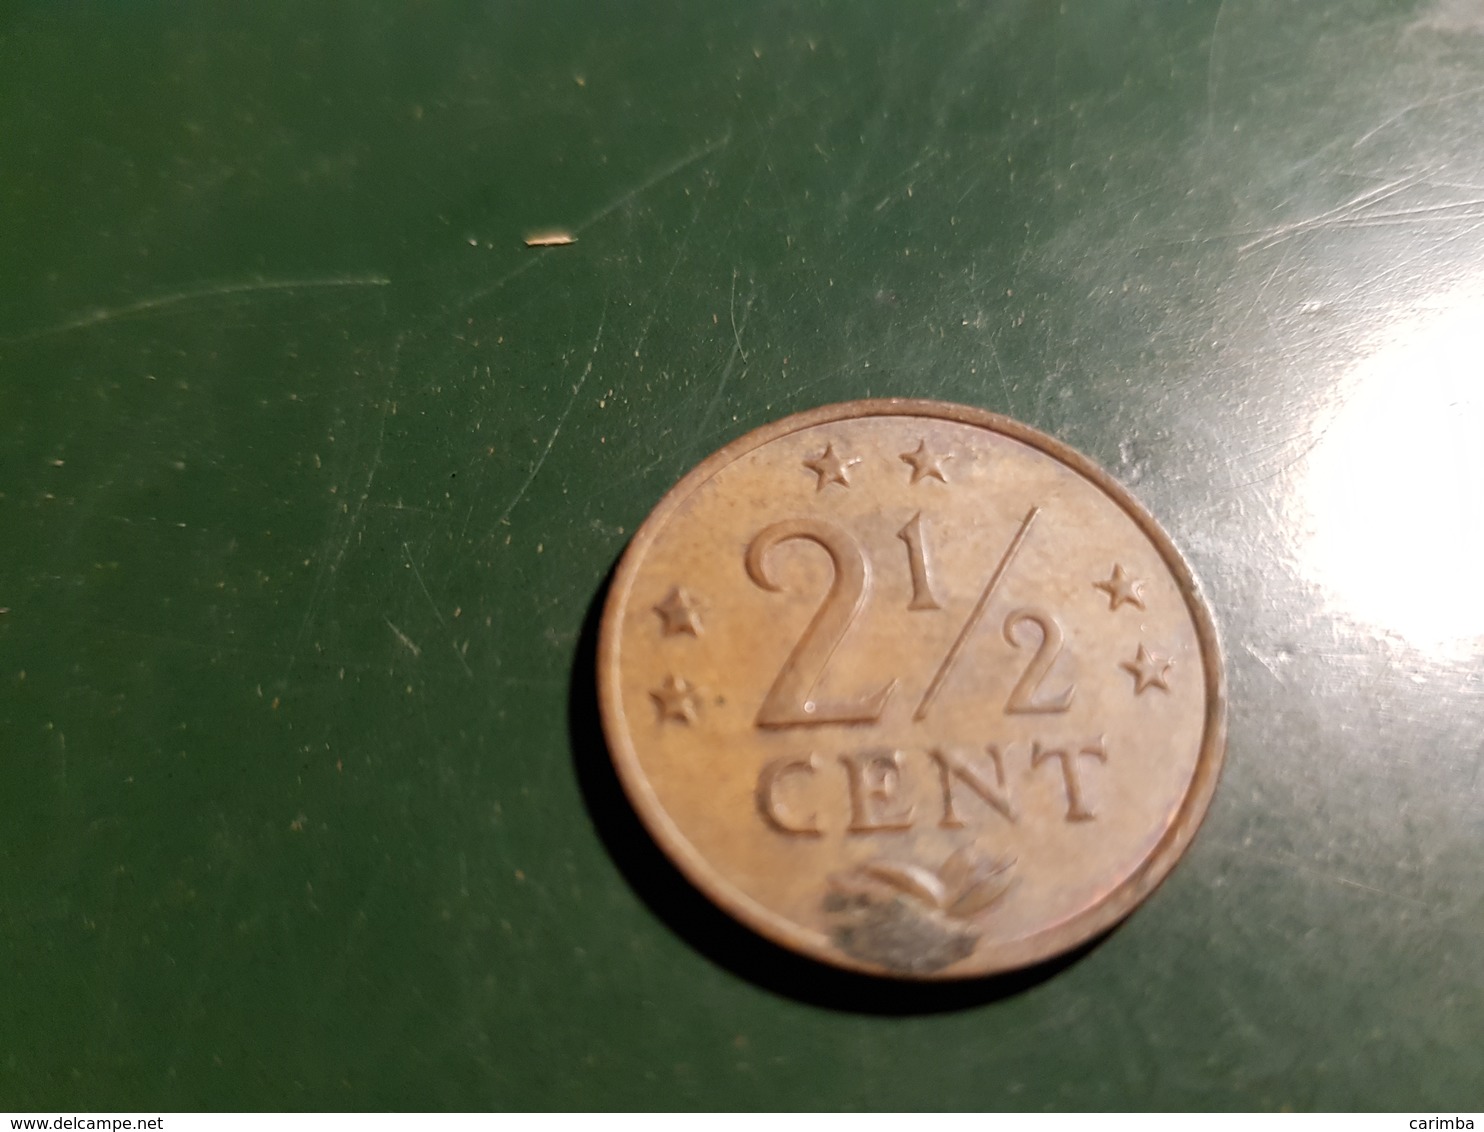 2 1/2 Cents 1971 - Netherlands Antilles